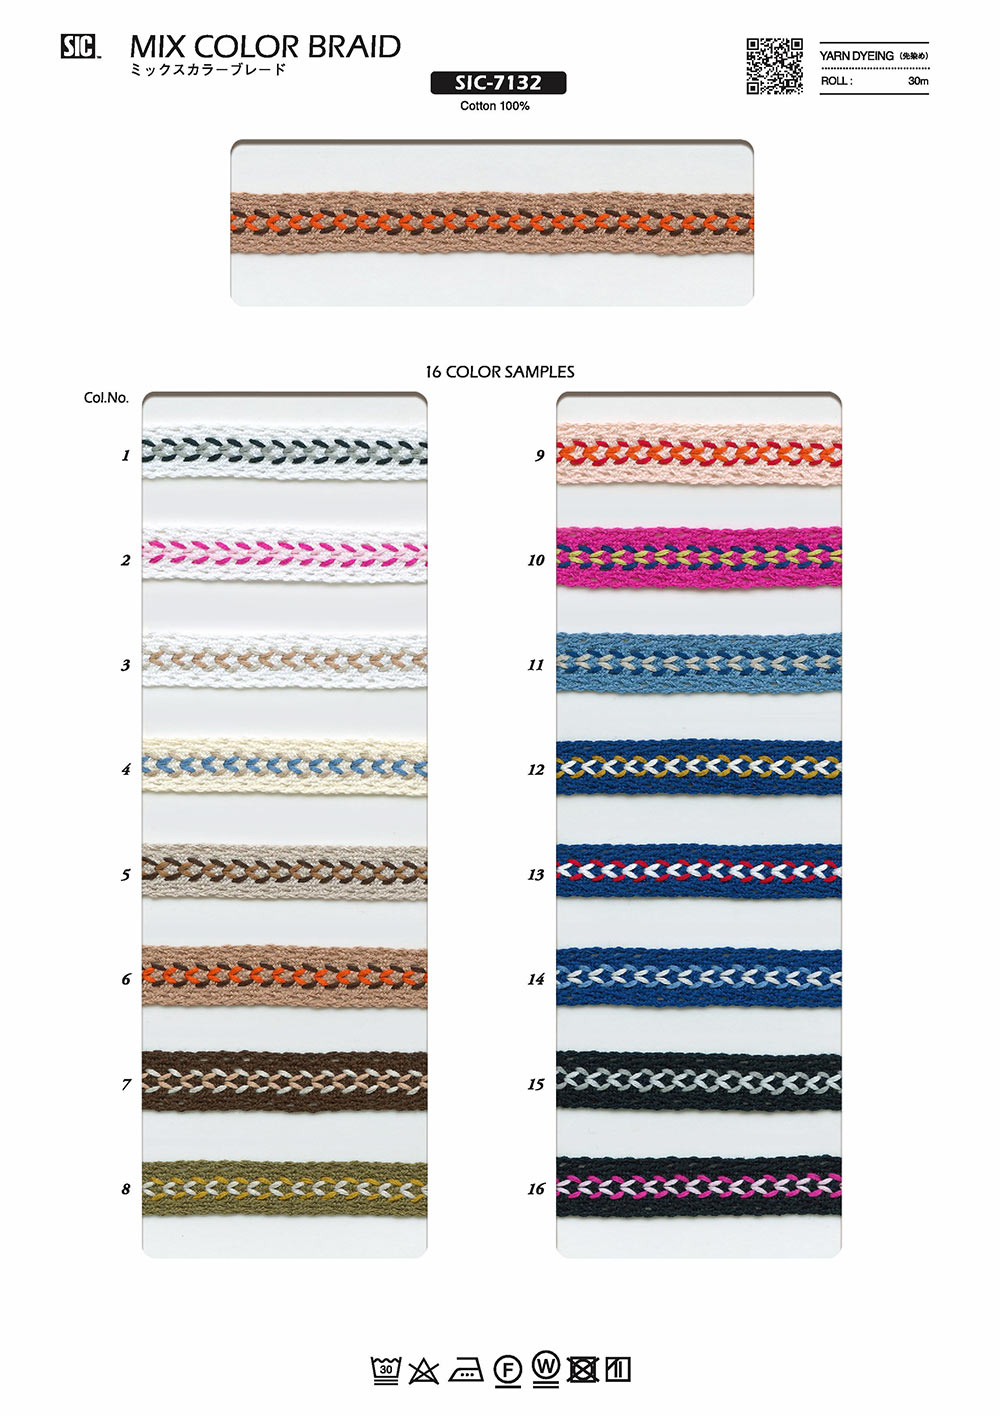 SIC-7132 Mixed Color Braid[Ribbon Tape Cord] SHINDO(SIC)